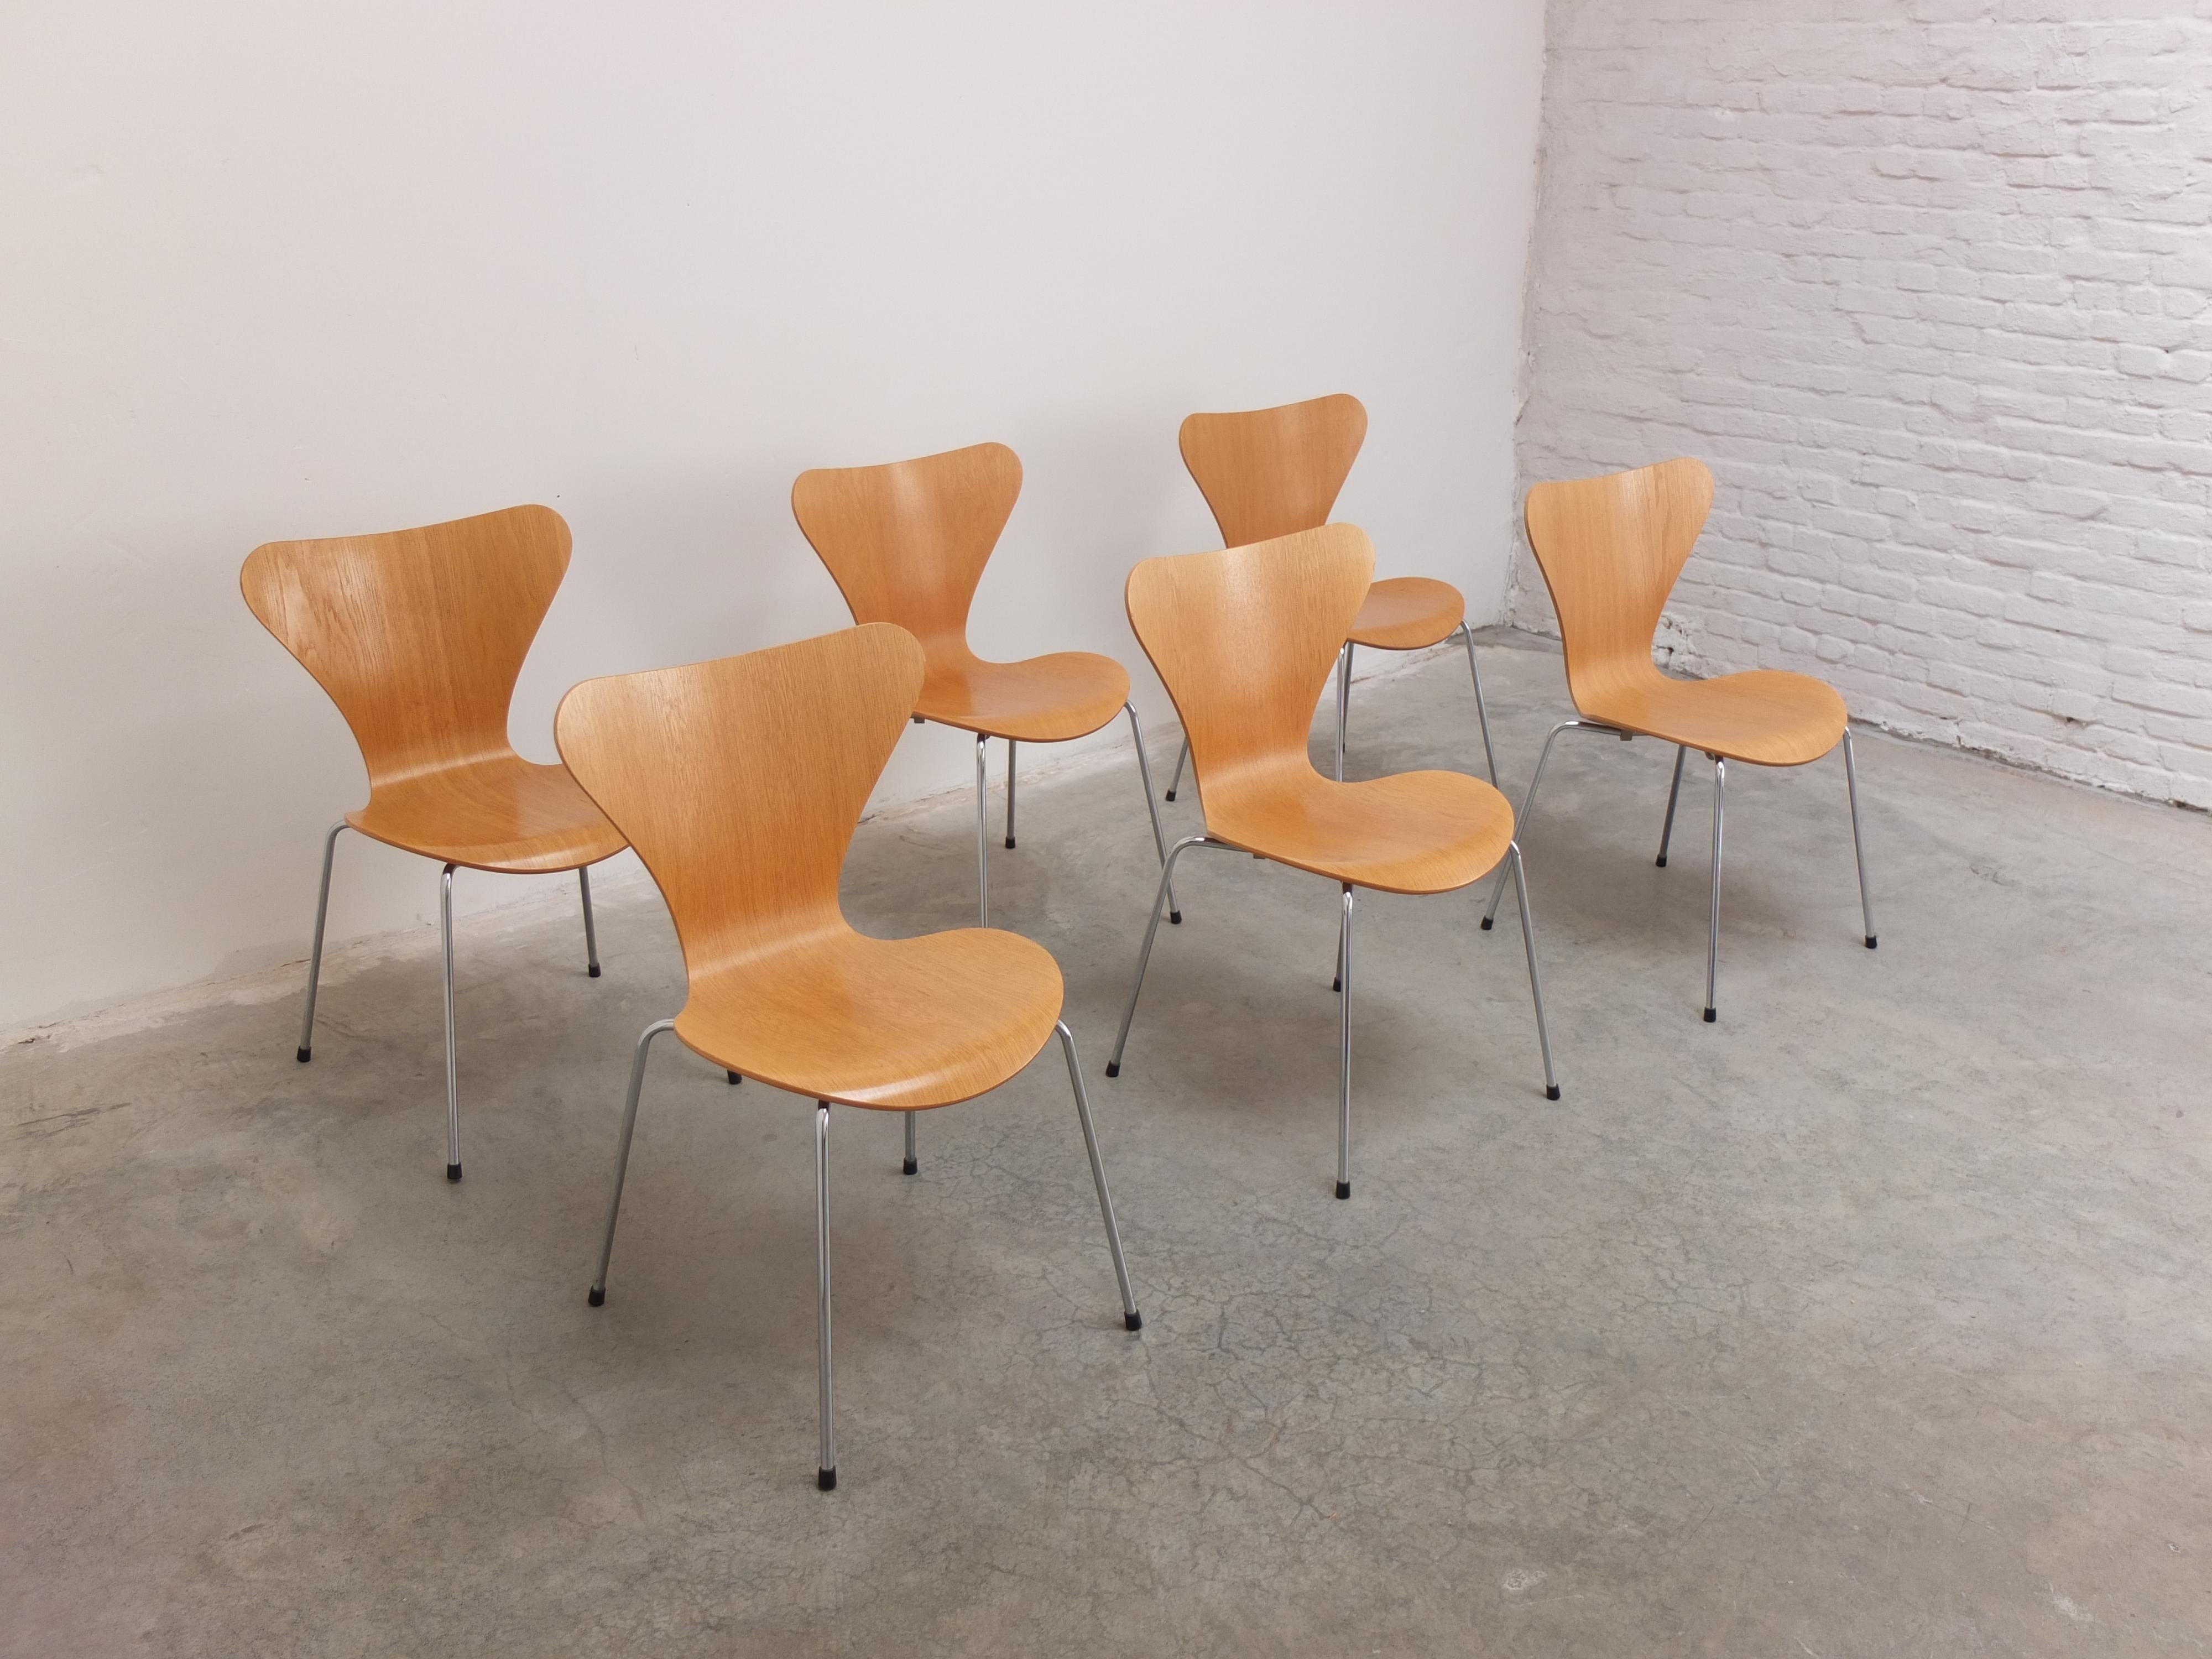 Scandinavian Modern Set of 6 'Series 7' Chairs in Oak by Arne Jacobsen for Fritz Hansen, 1955